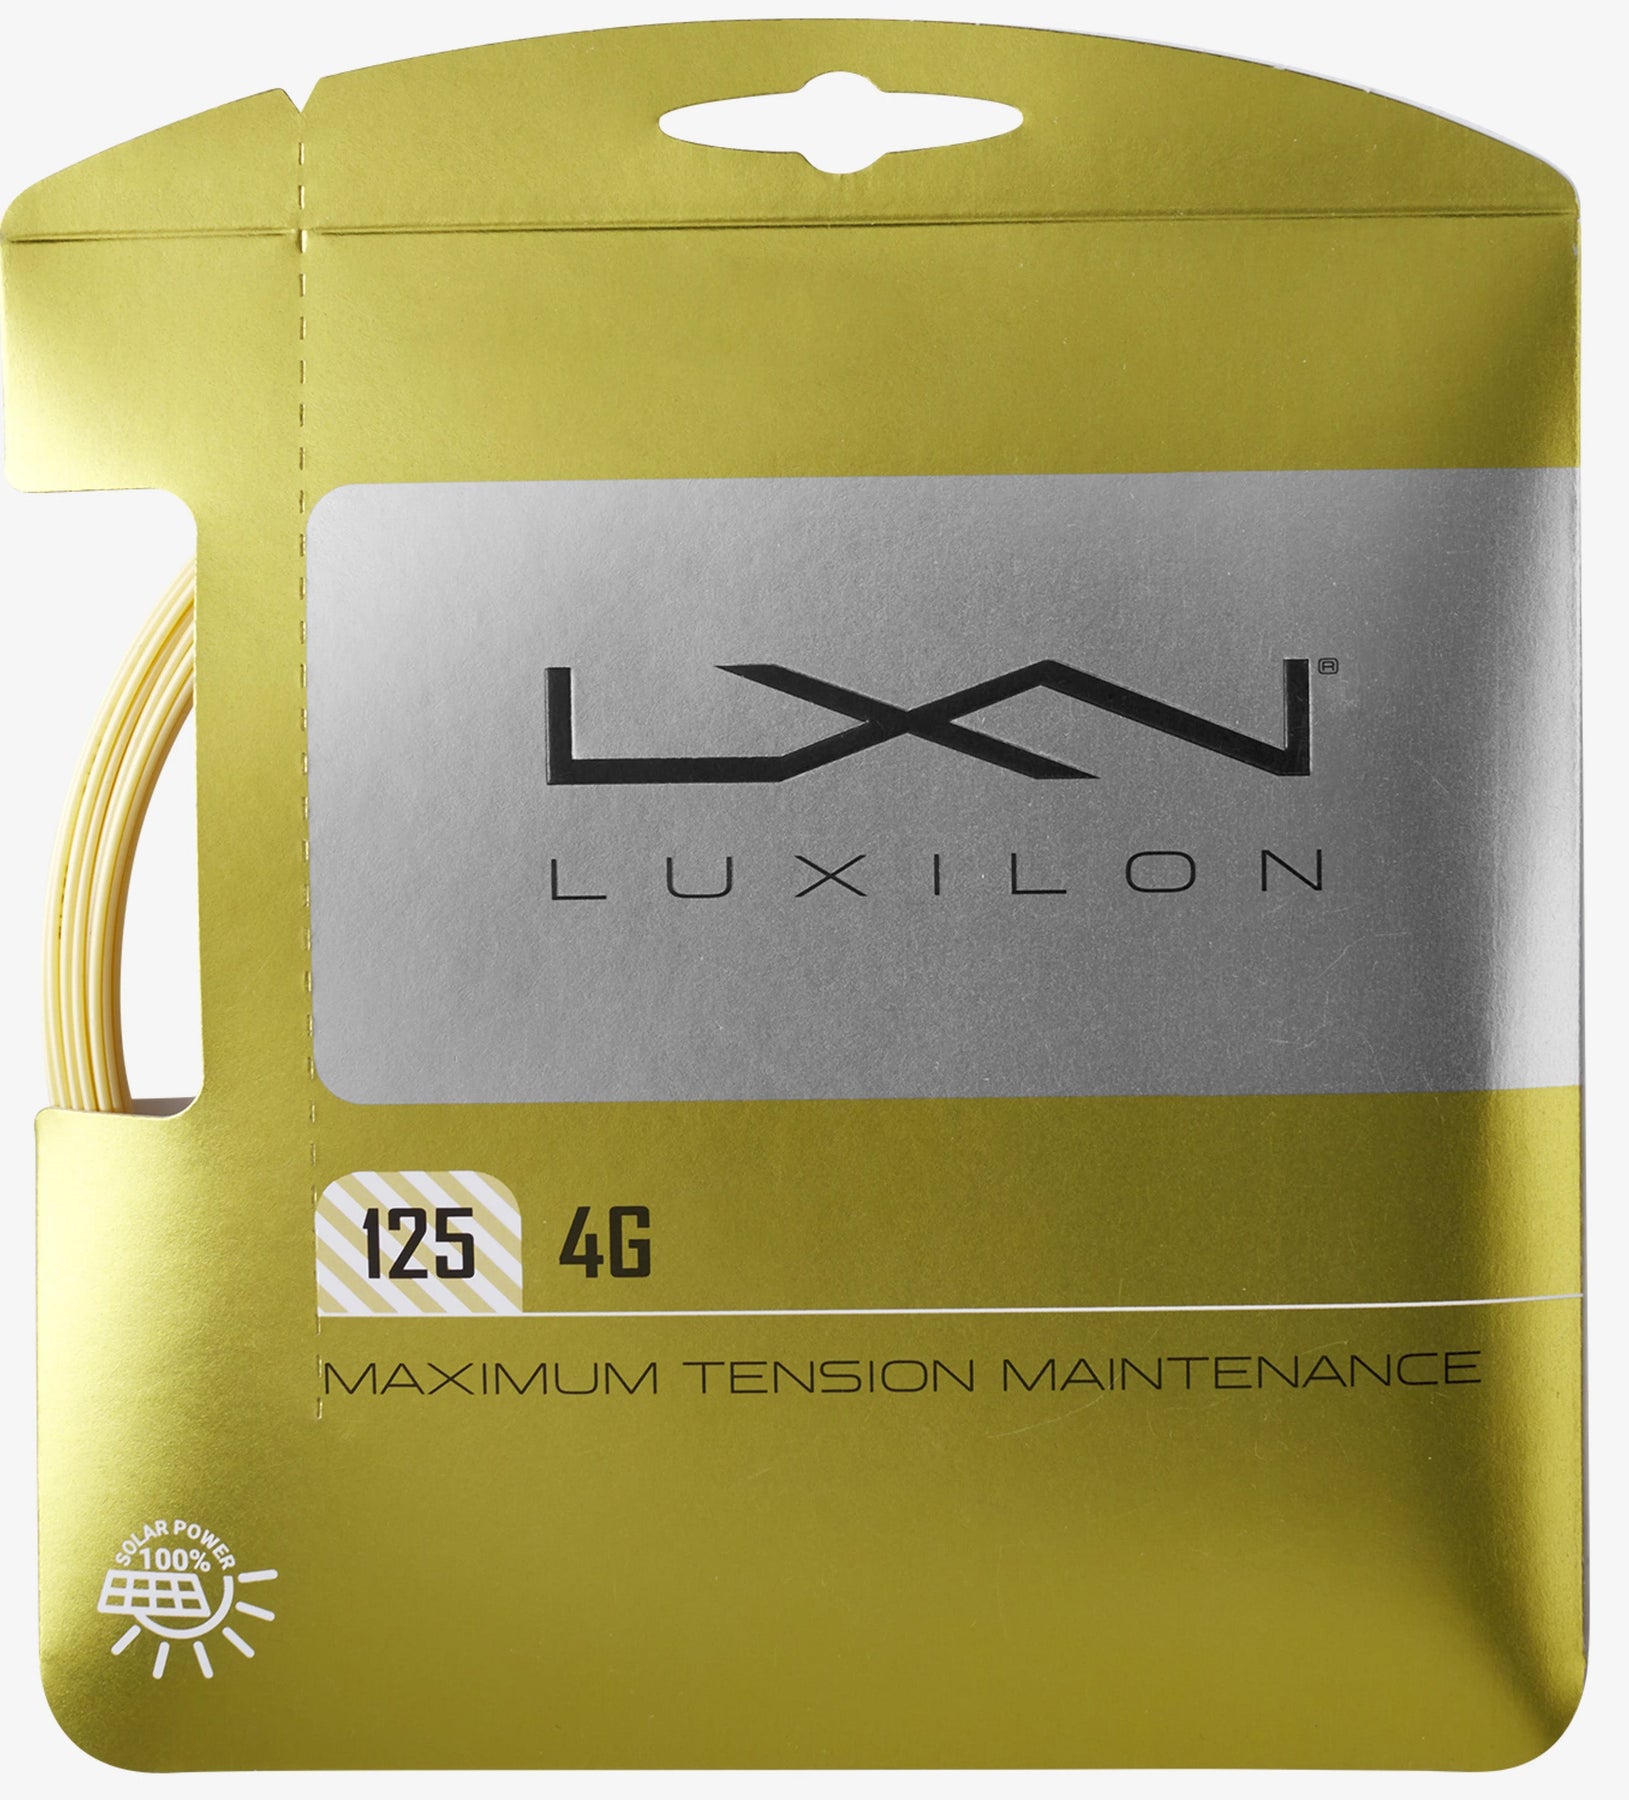 Luxilon 125 4G Tennis 12M Cut Length String Set